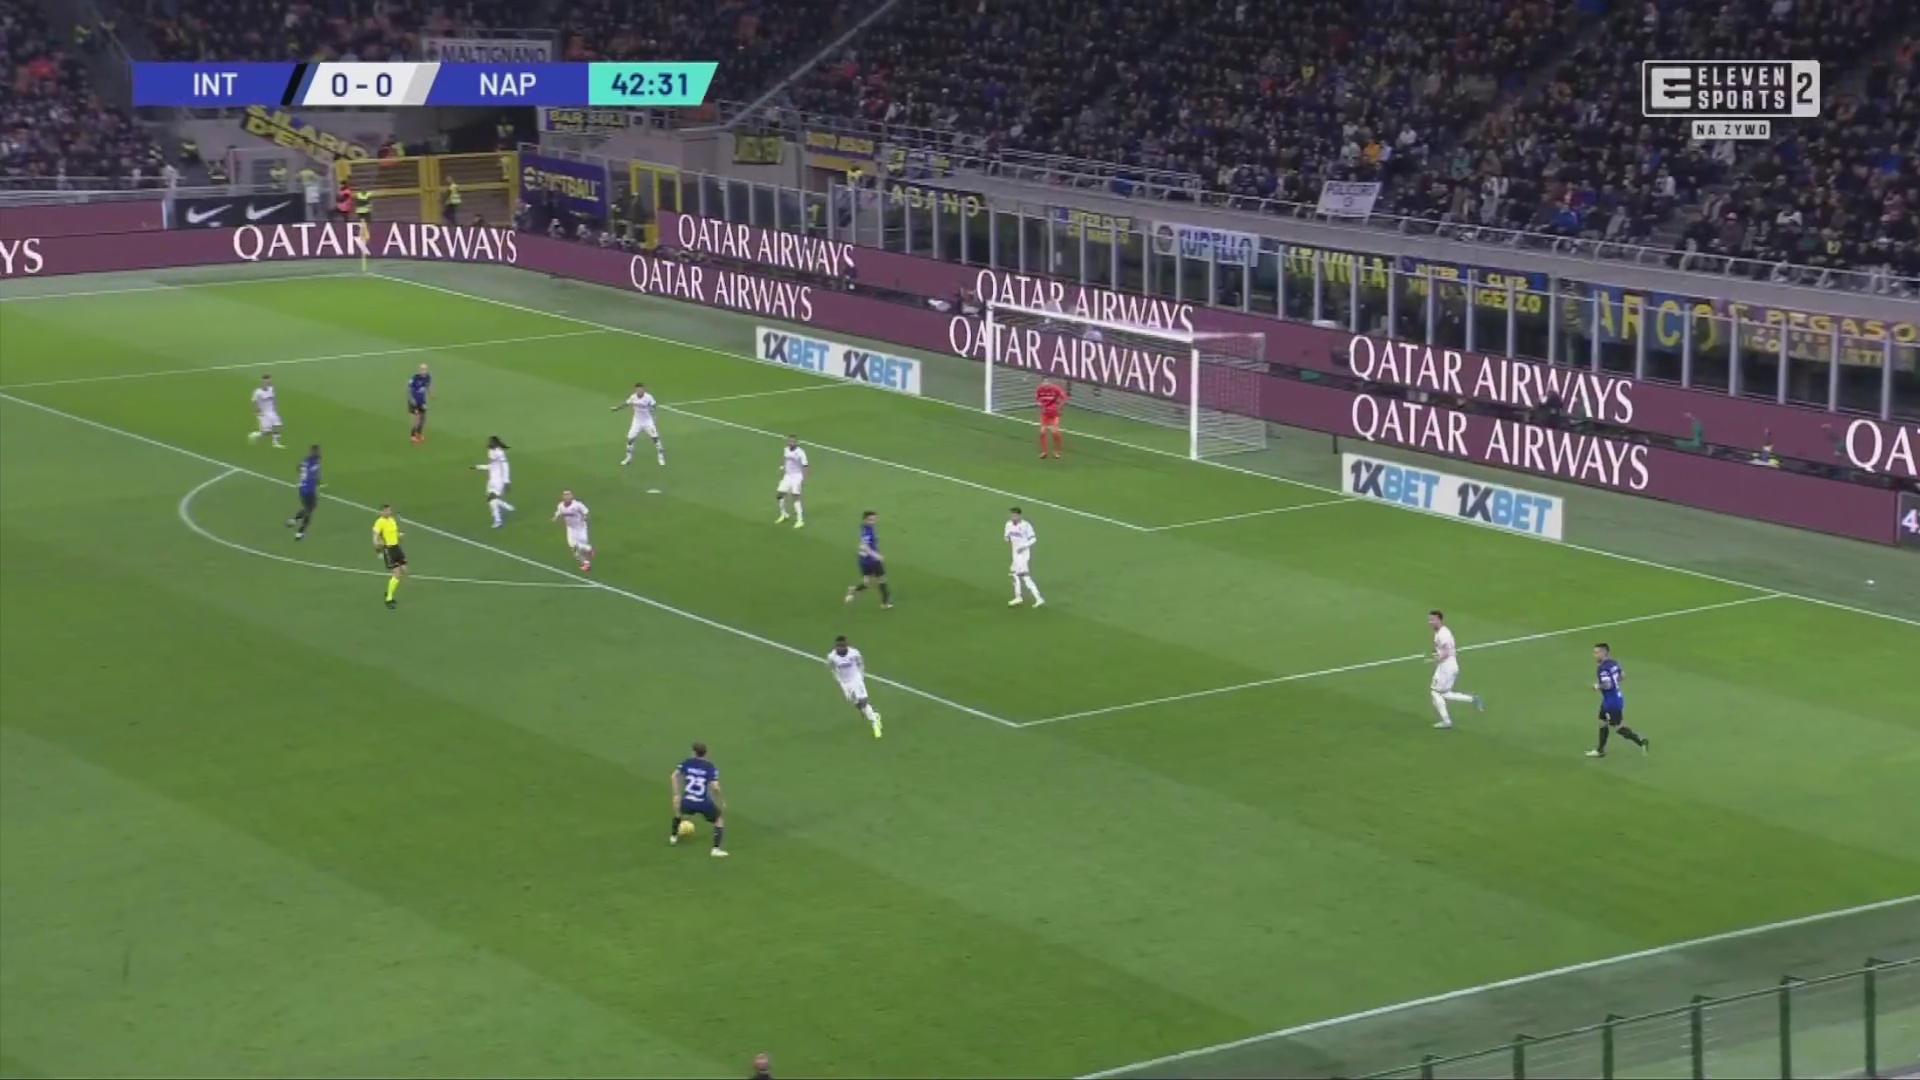 Inter [1] - 0 Napoli - Matteo Darmian 43'